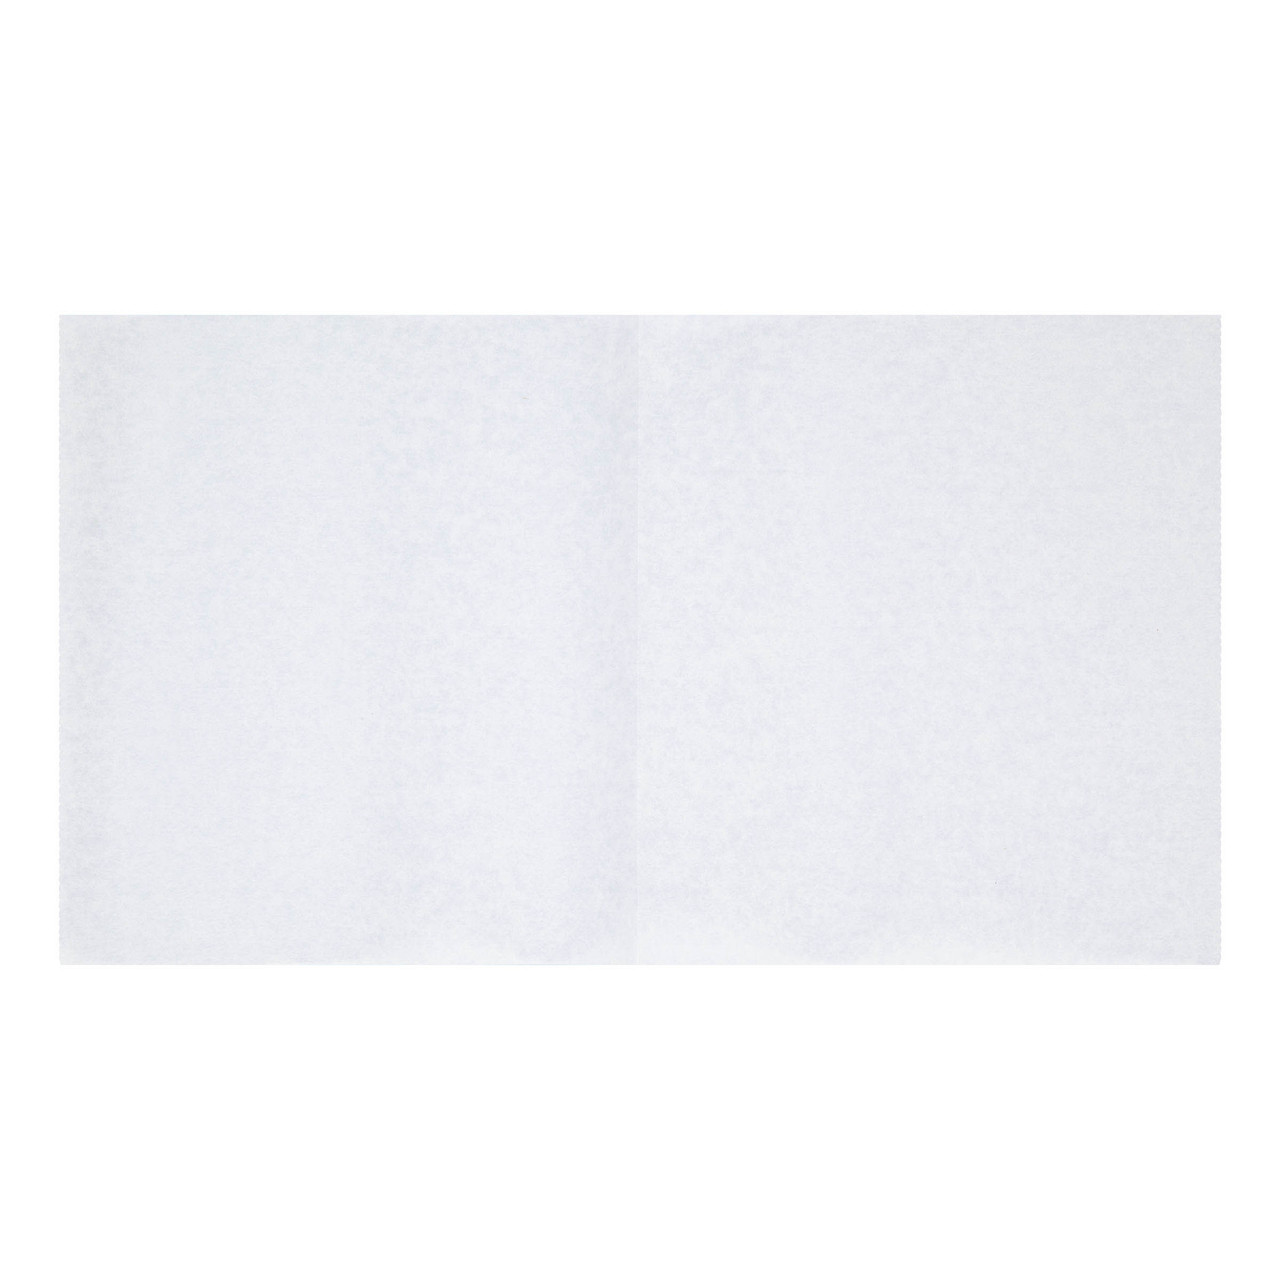 MarketWax® interfolded dry wax deli paper MW6 - Color White - Dimensions 6.00 x 10.75 (11006)